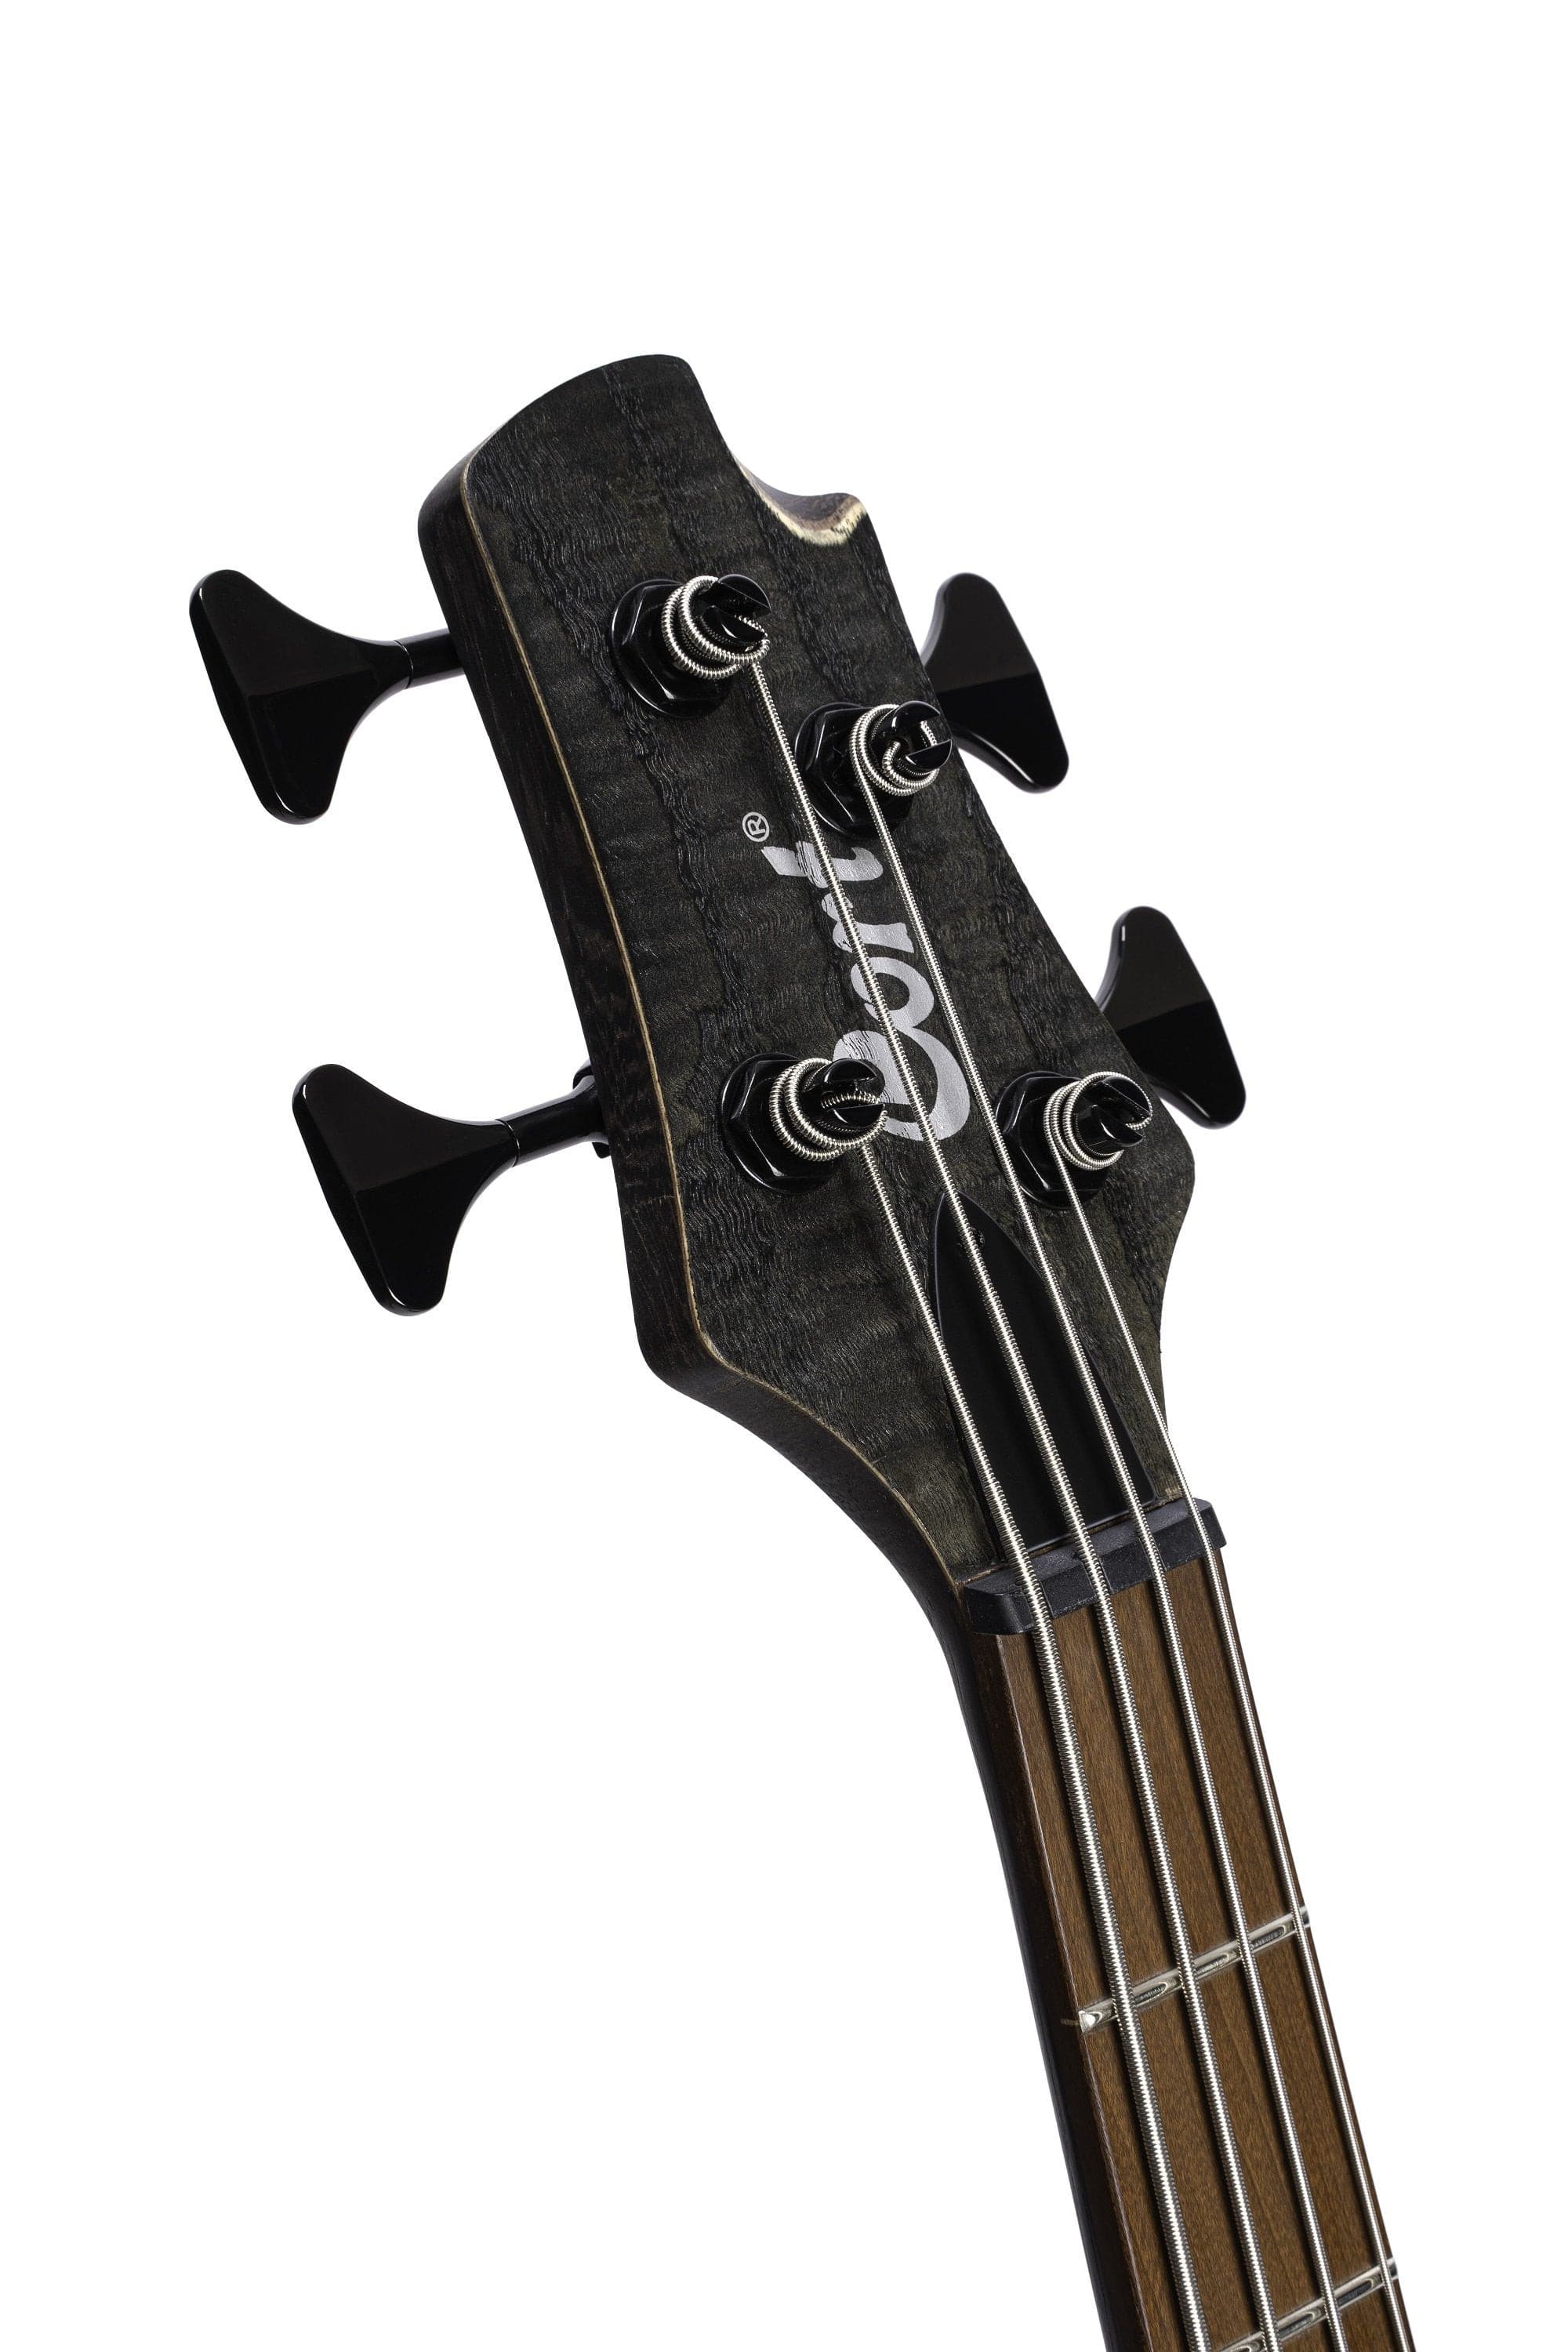 Cort B4 Element Open Pore Trans Black, Bass Guitar for sale at Richards Guitars.